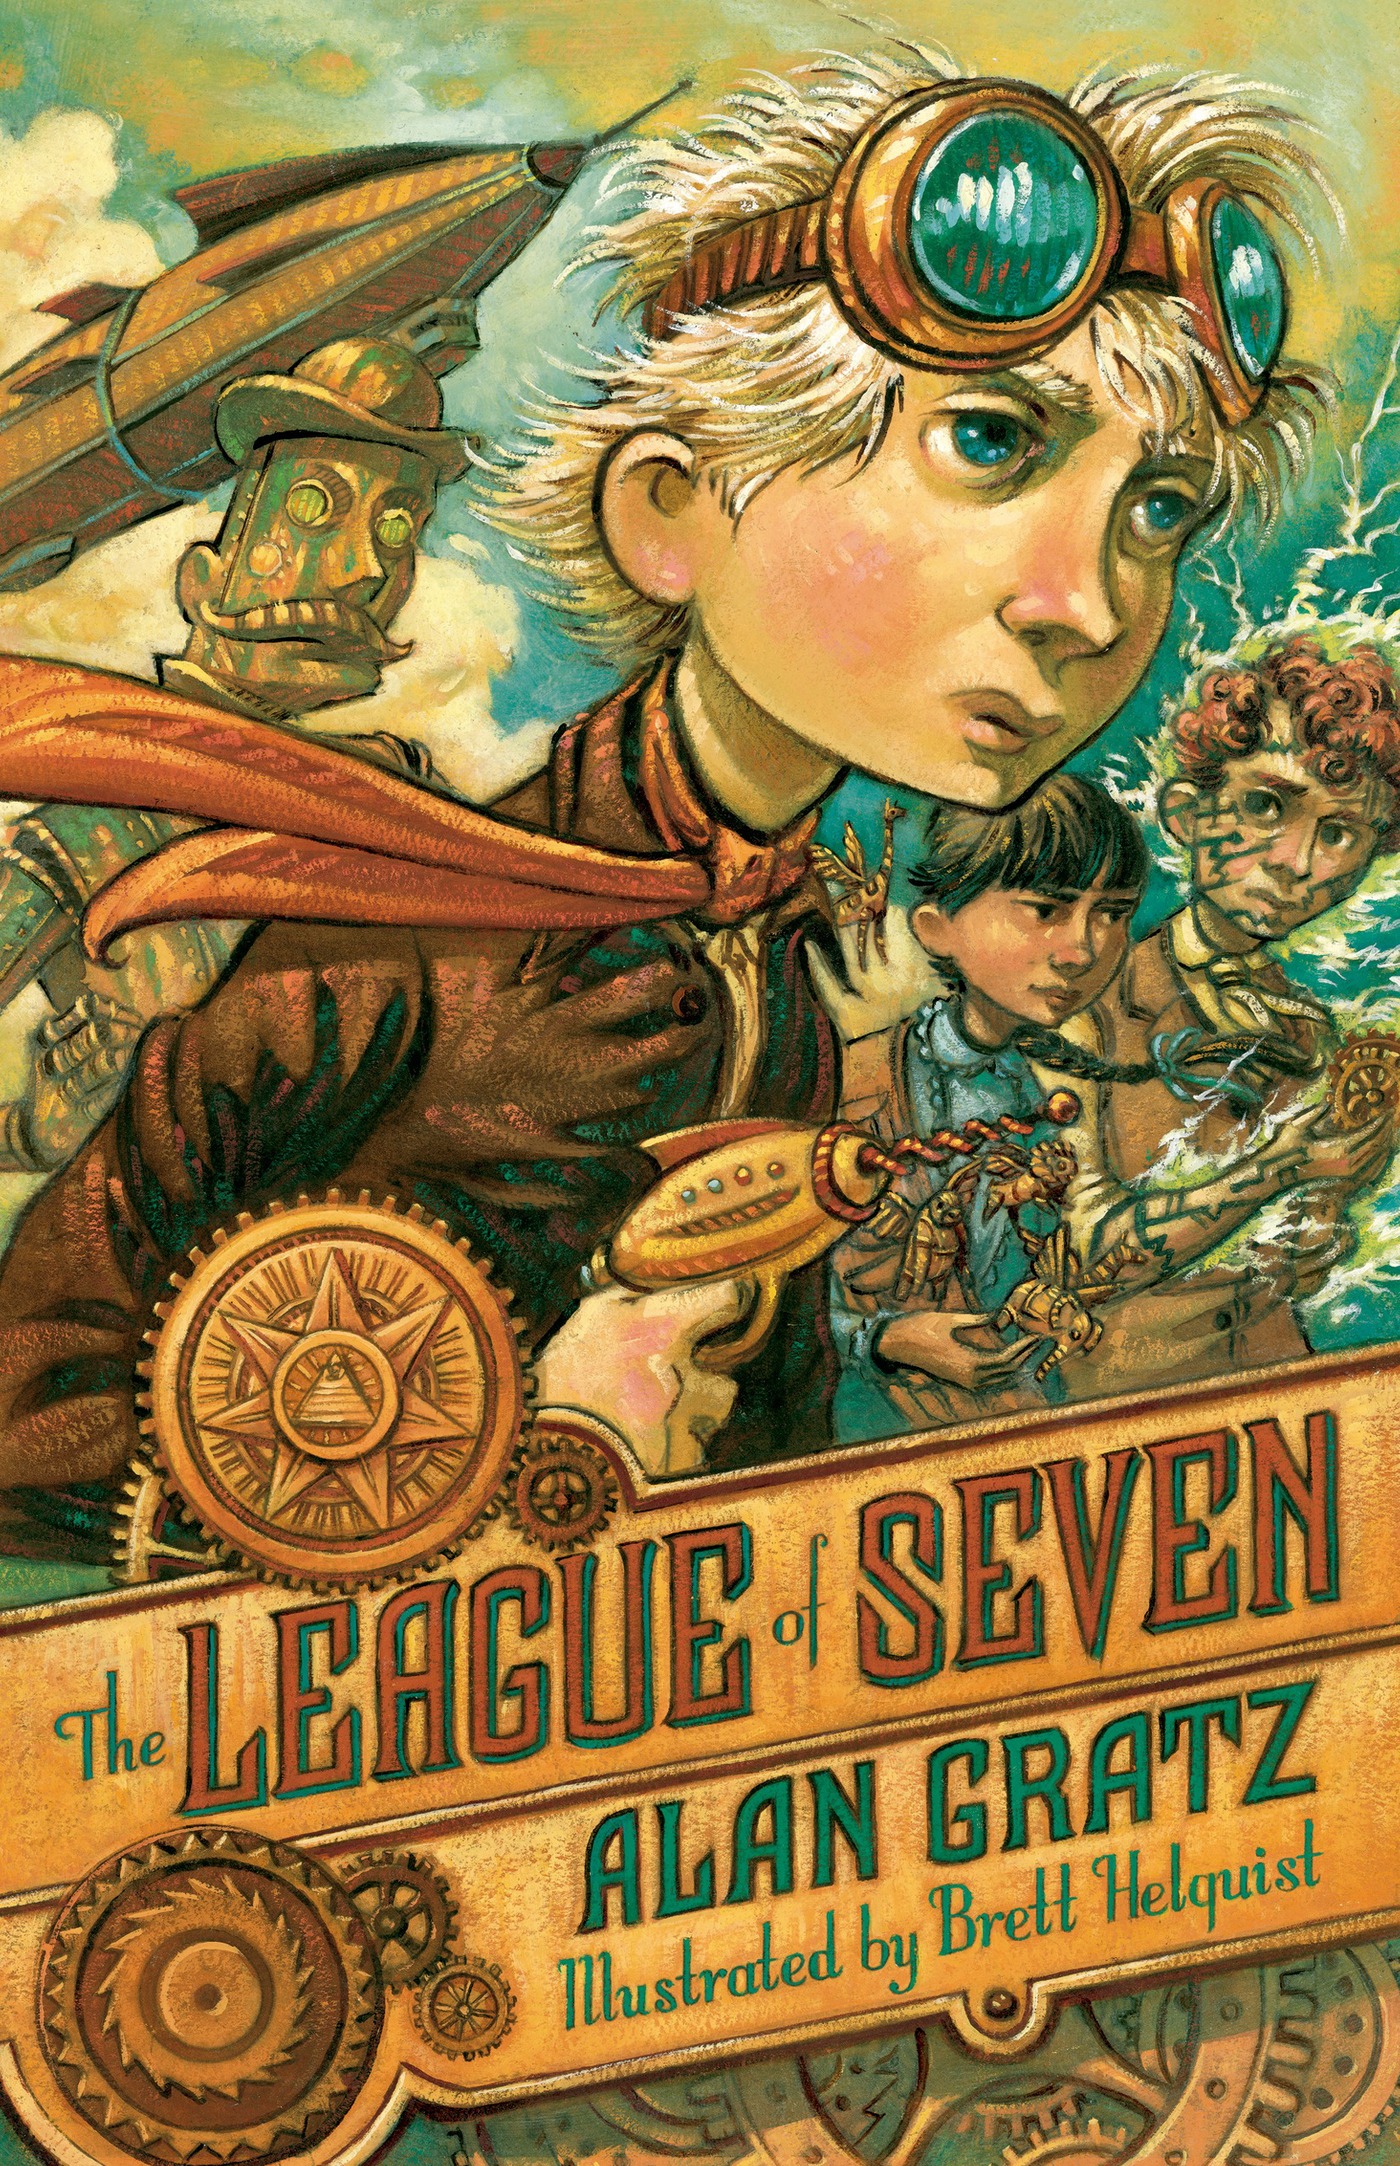 The League of Seven by Alan Gratz, Brett Helquist